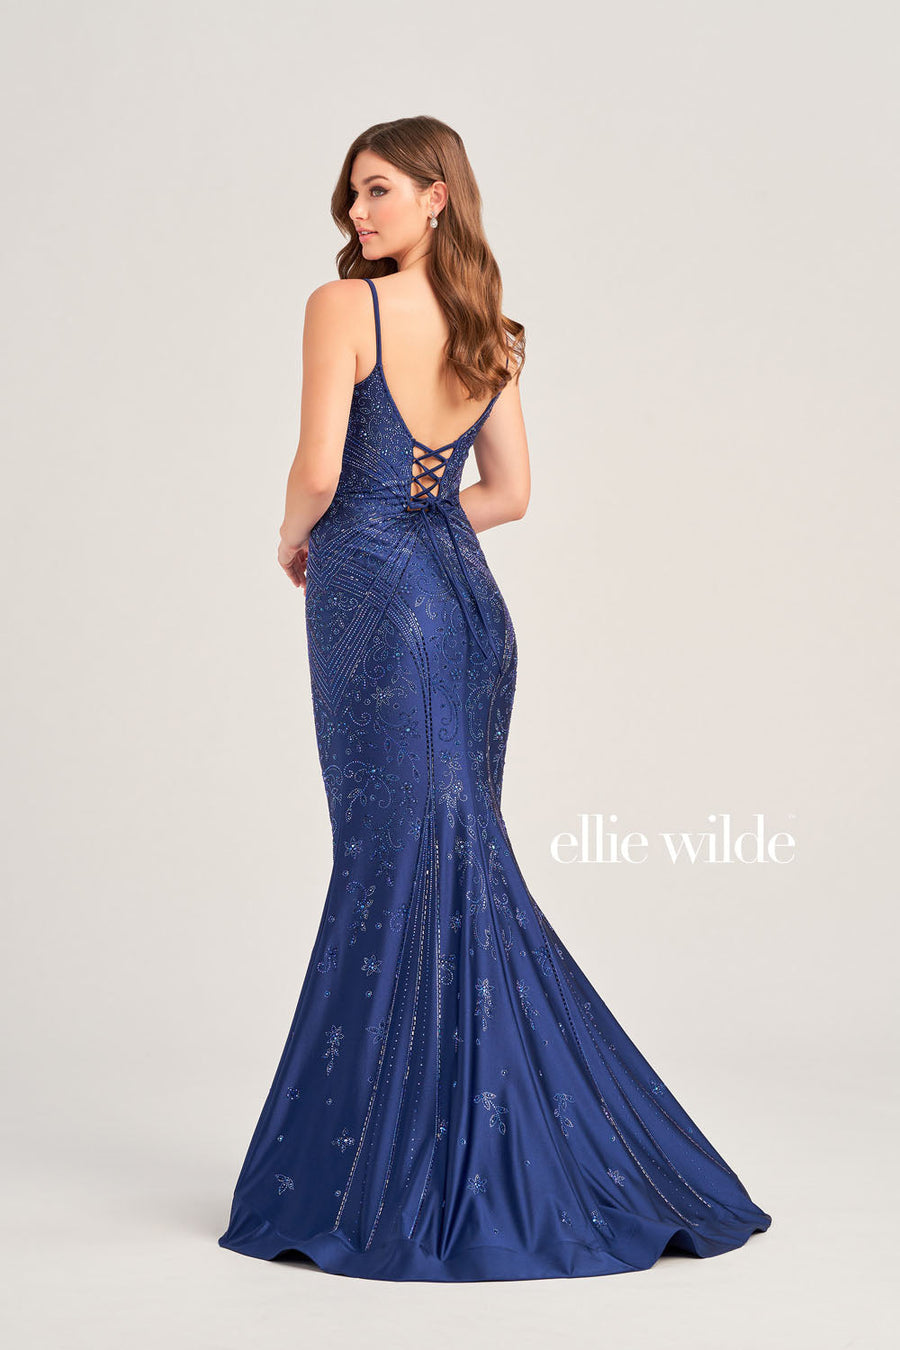 Ellie Wilde Prom Dresses | Formal Approach | Ellie Wilde by Mon Cheri